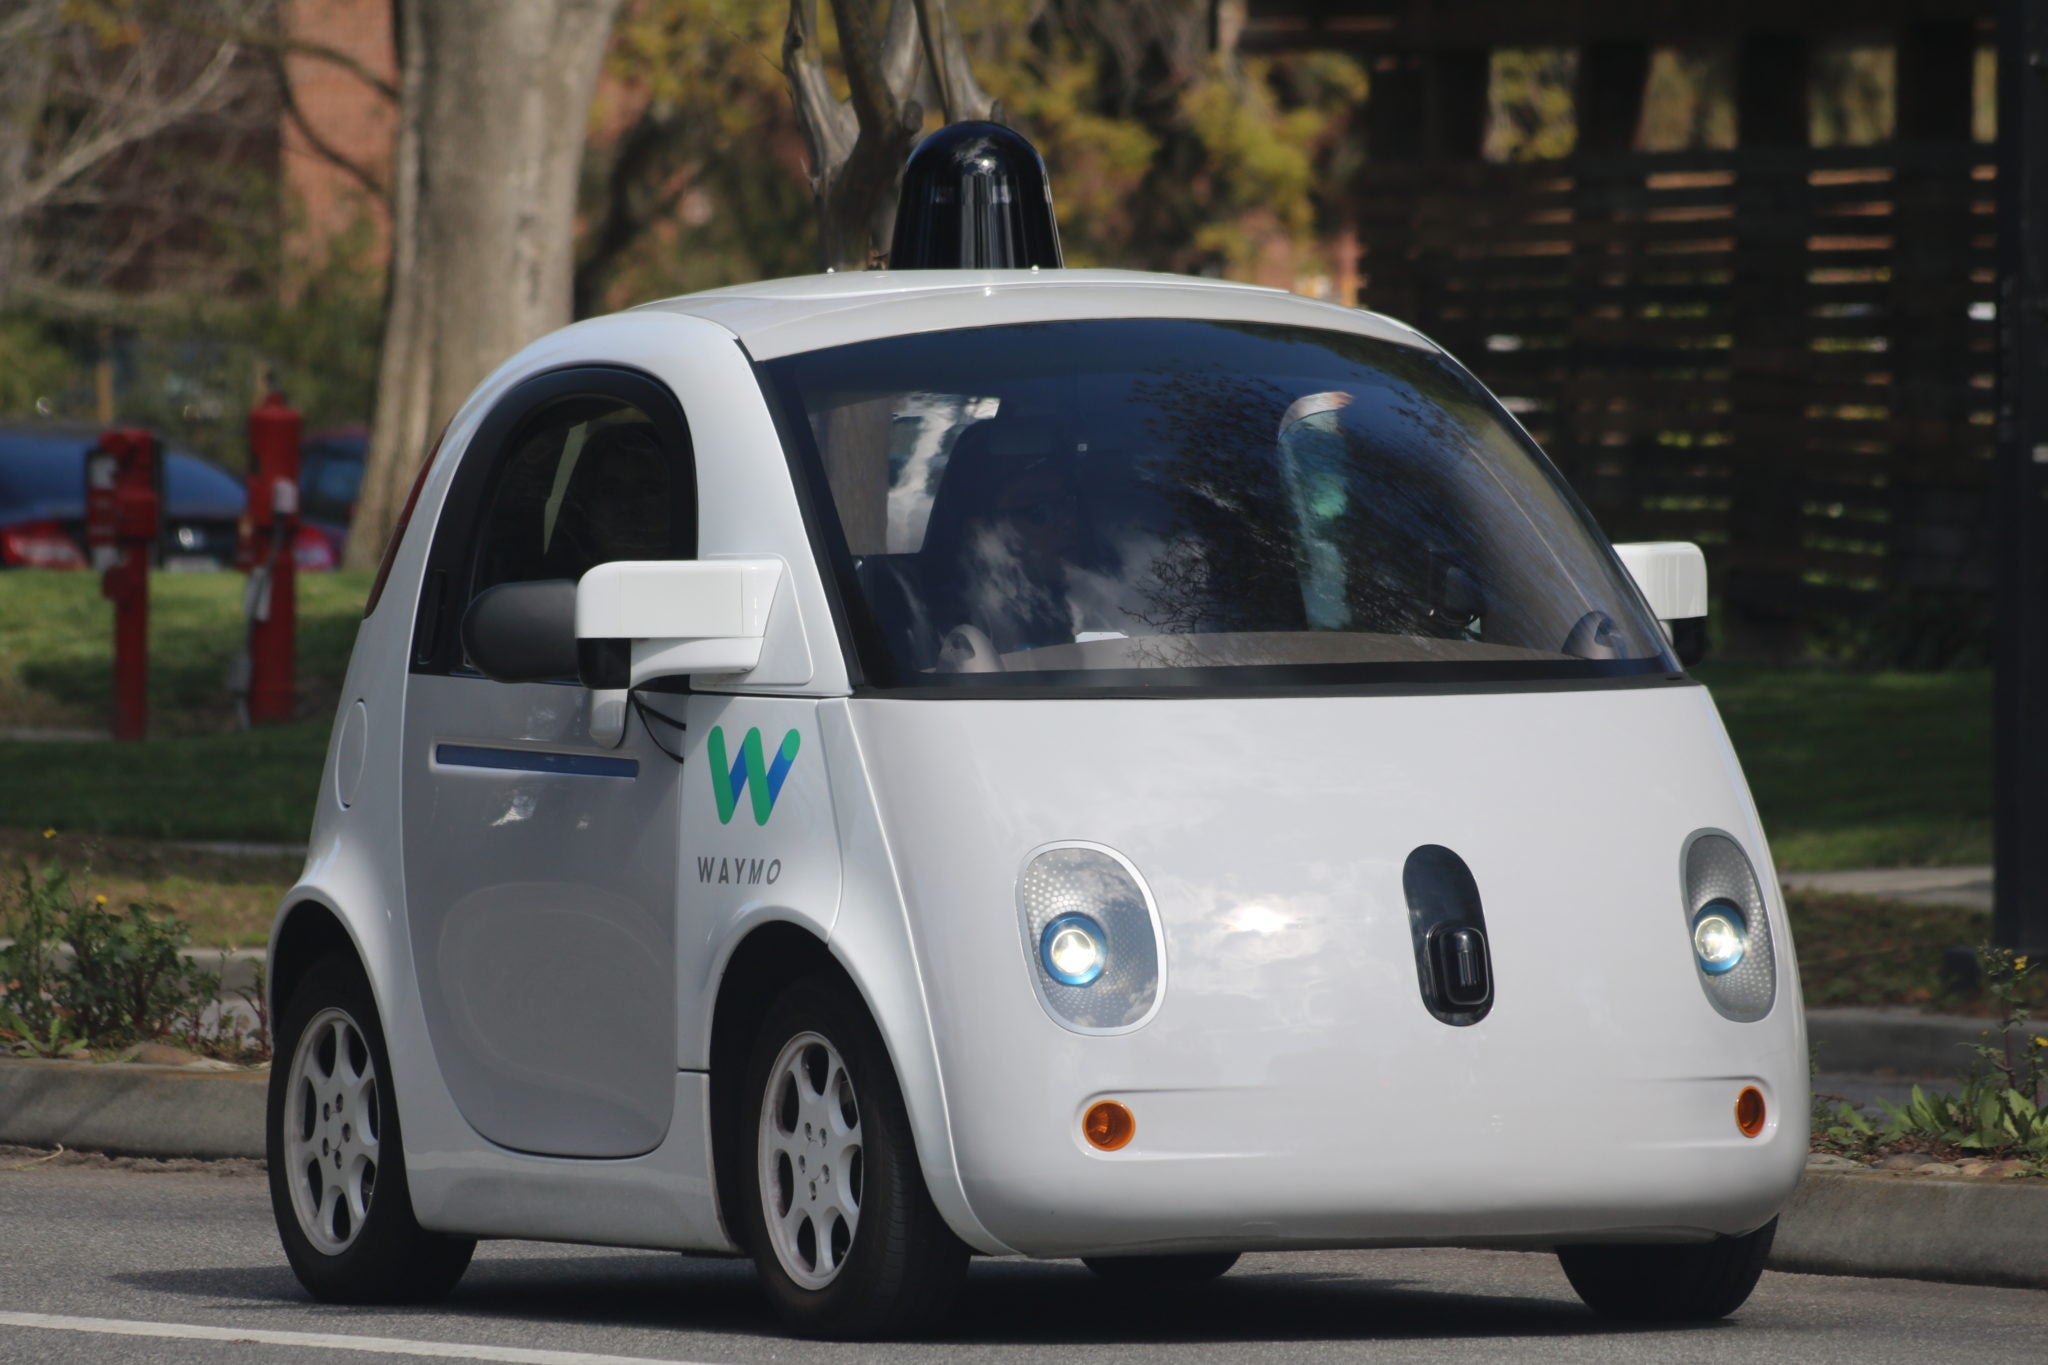 Waymo ditches drivers altogether in latest autonomous test